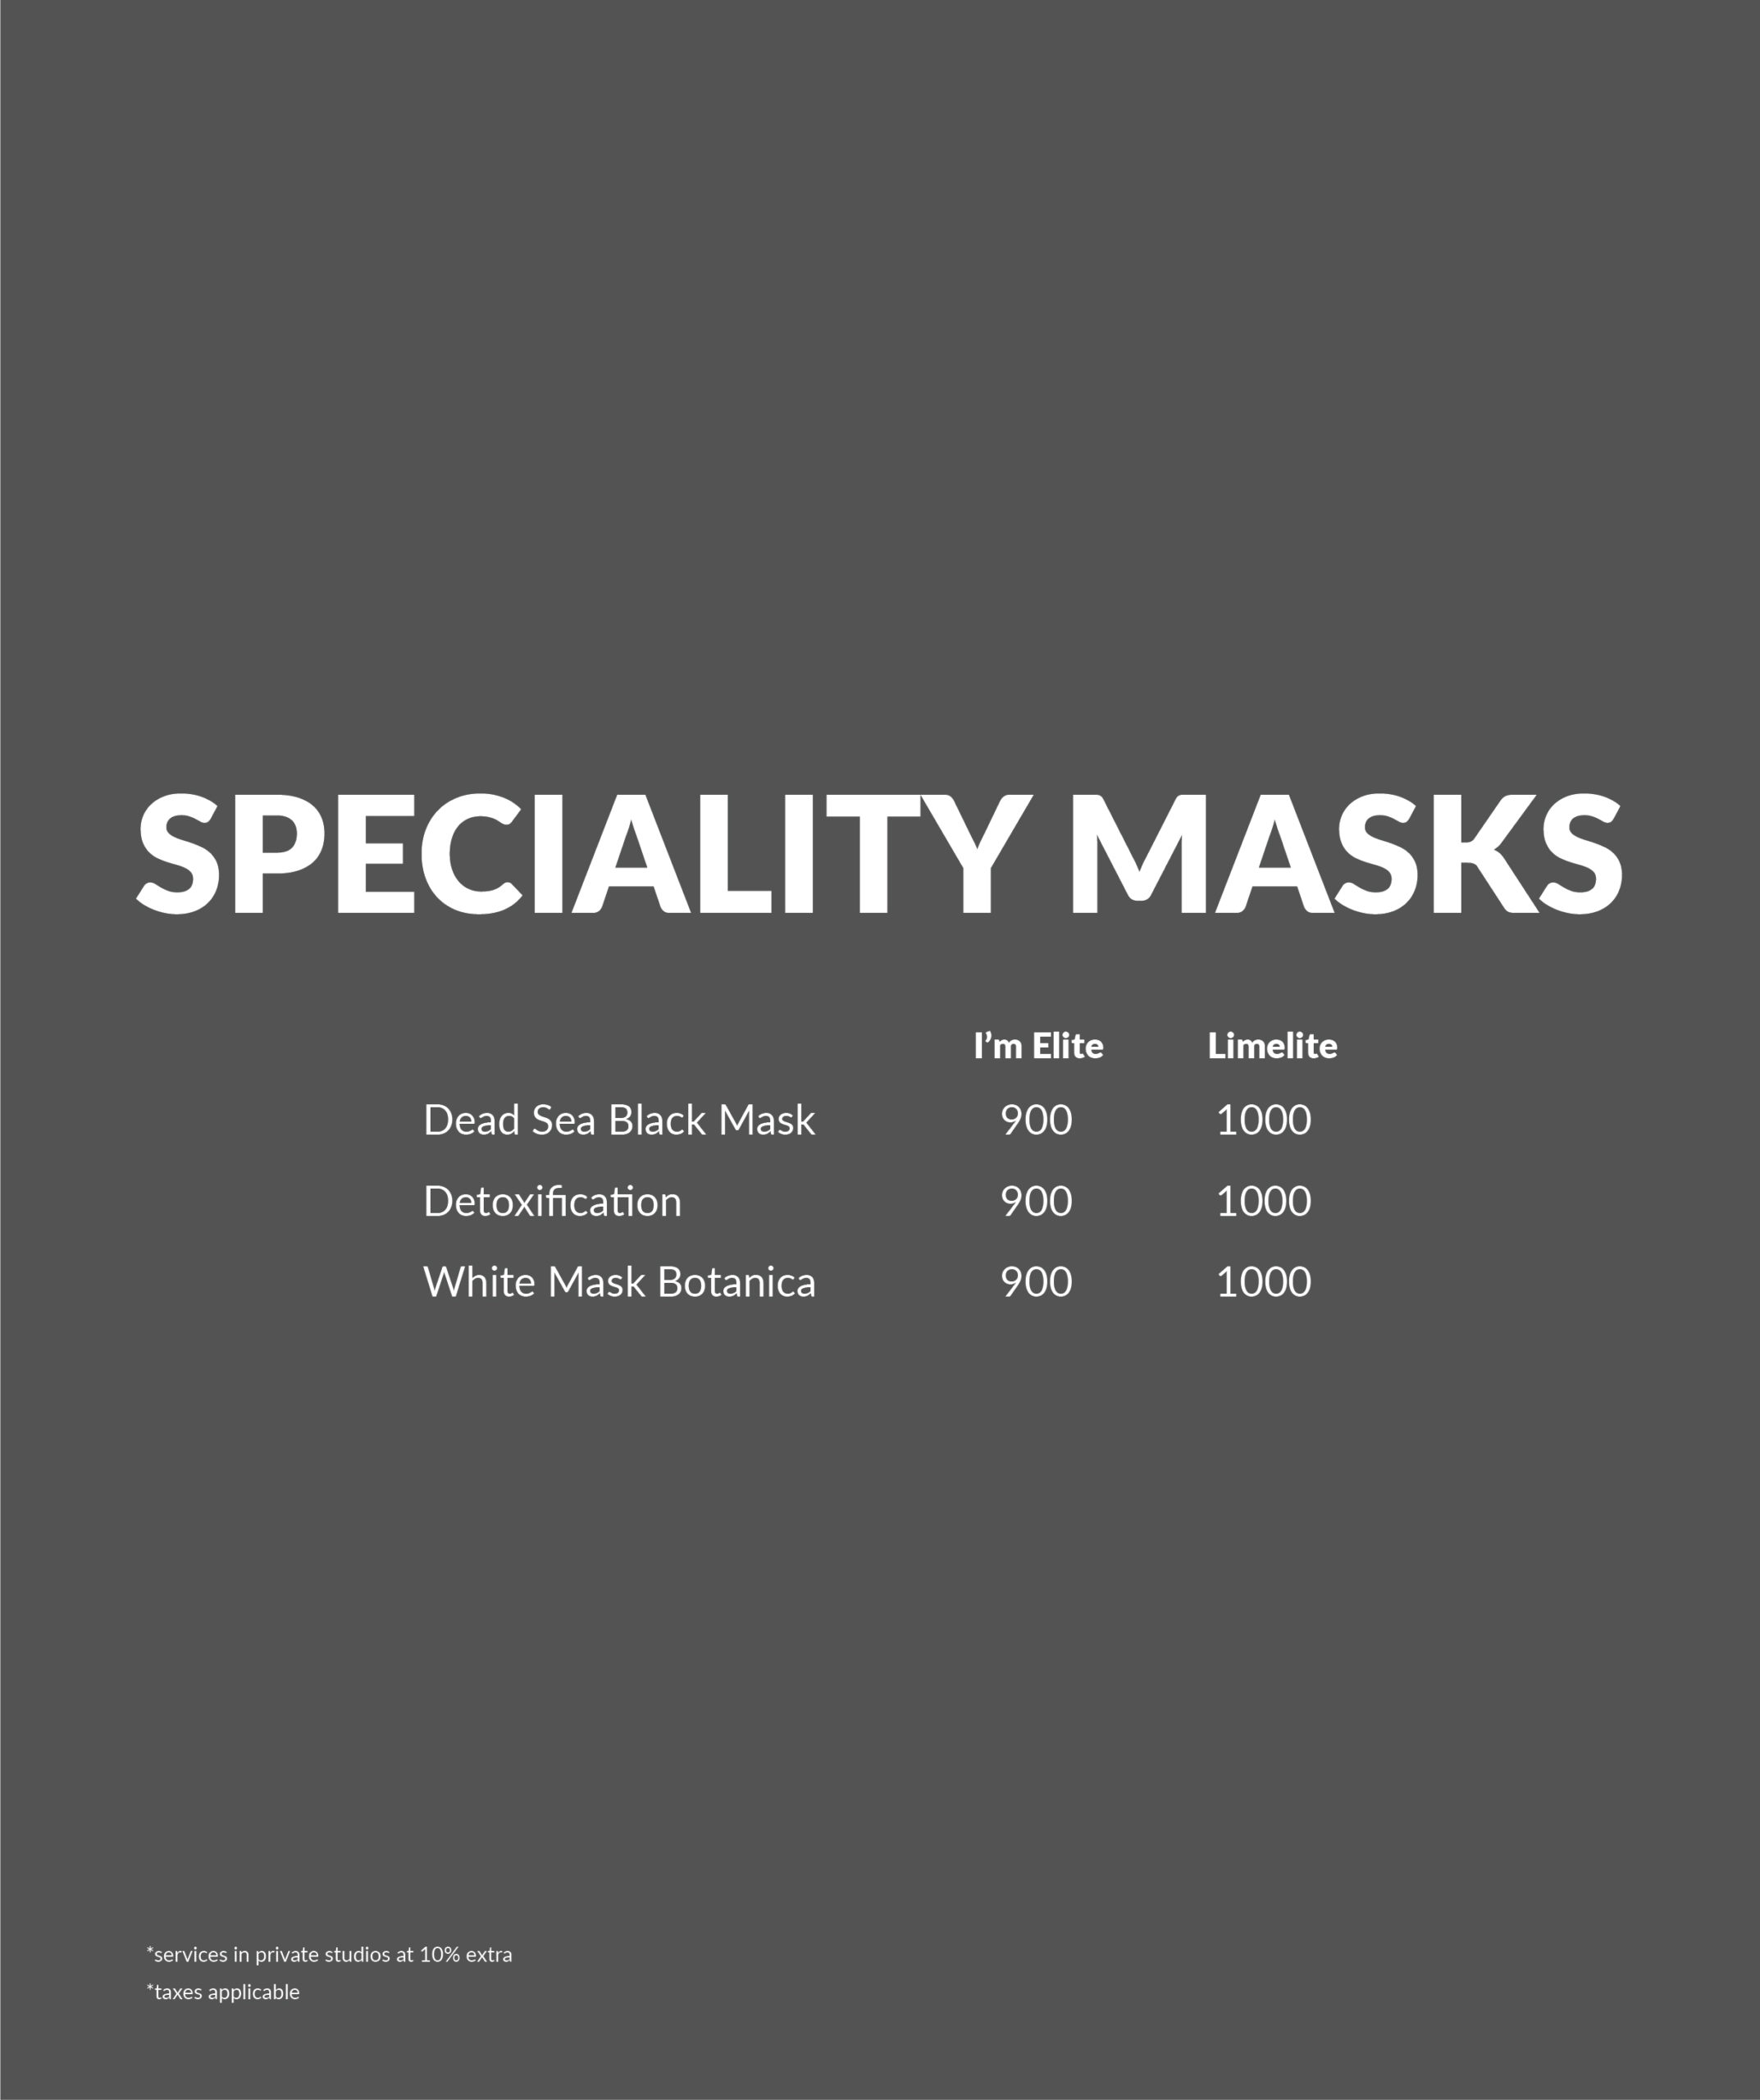 Speciality Masks